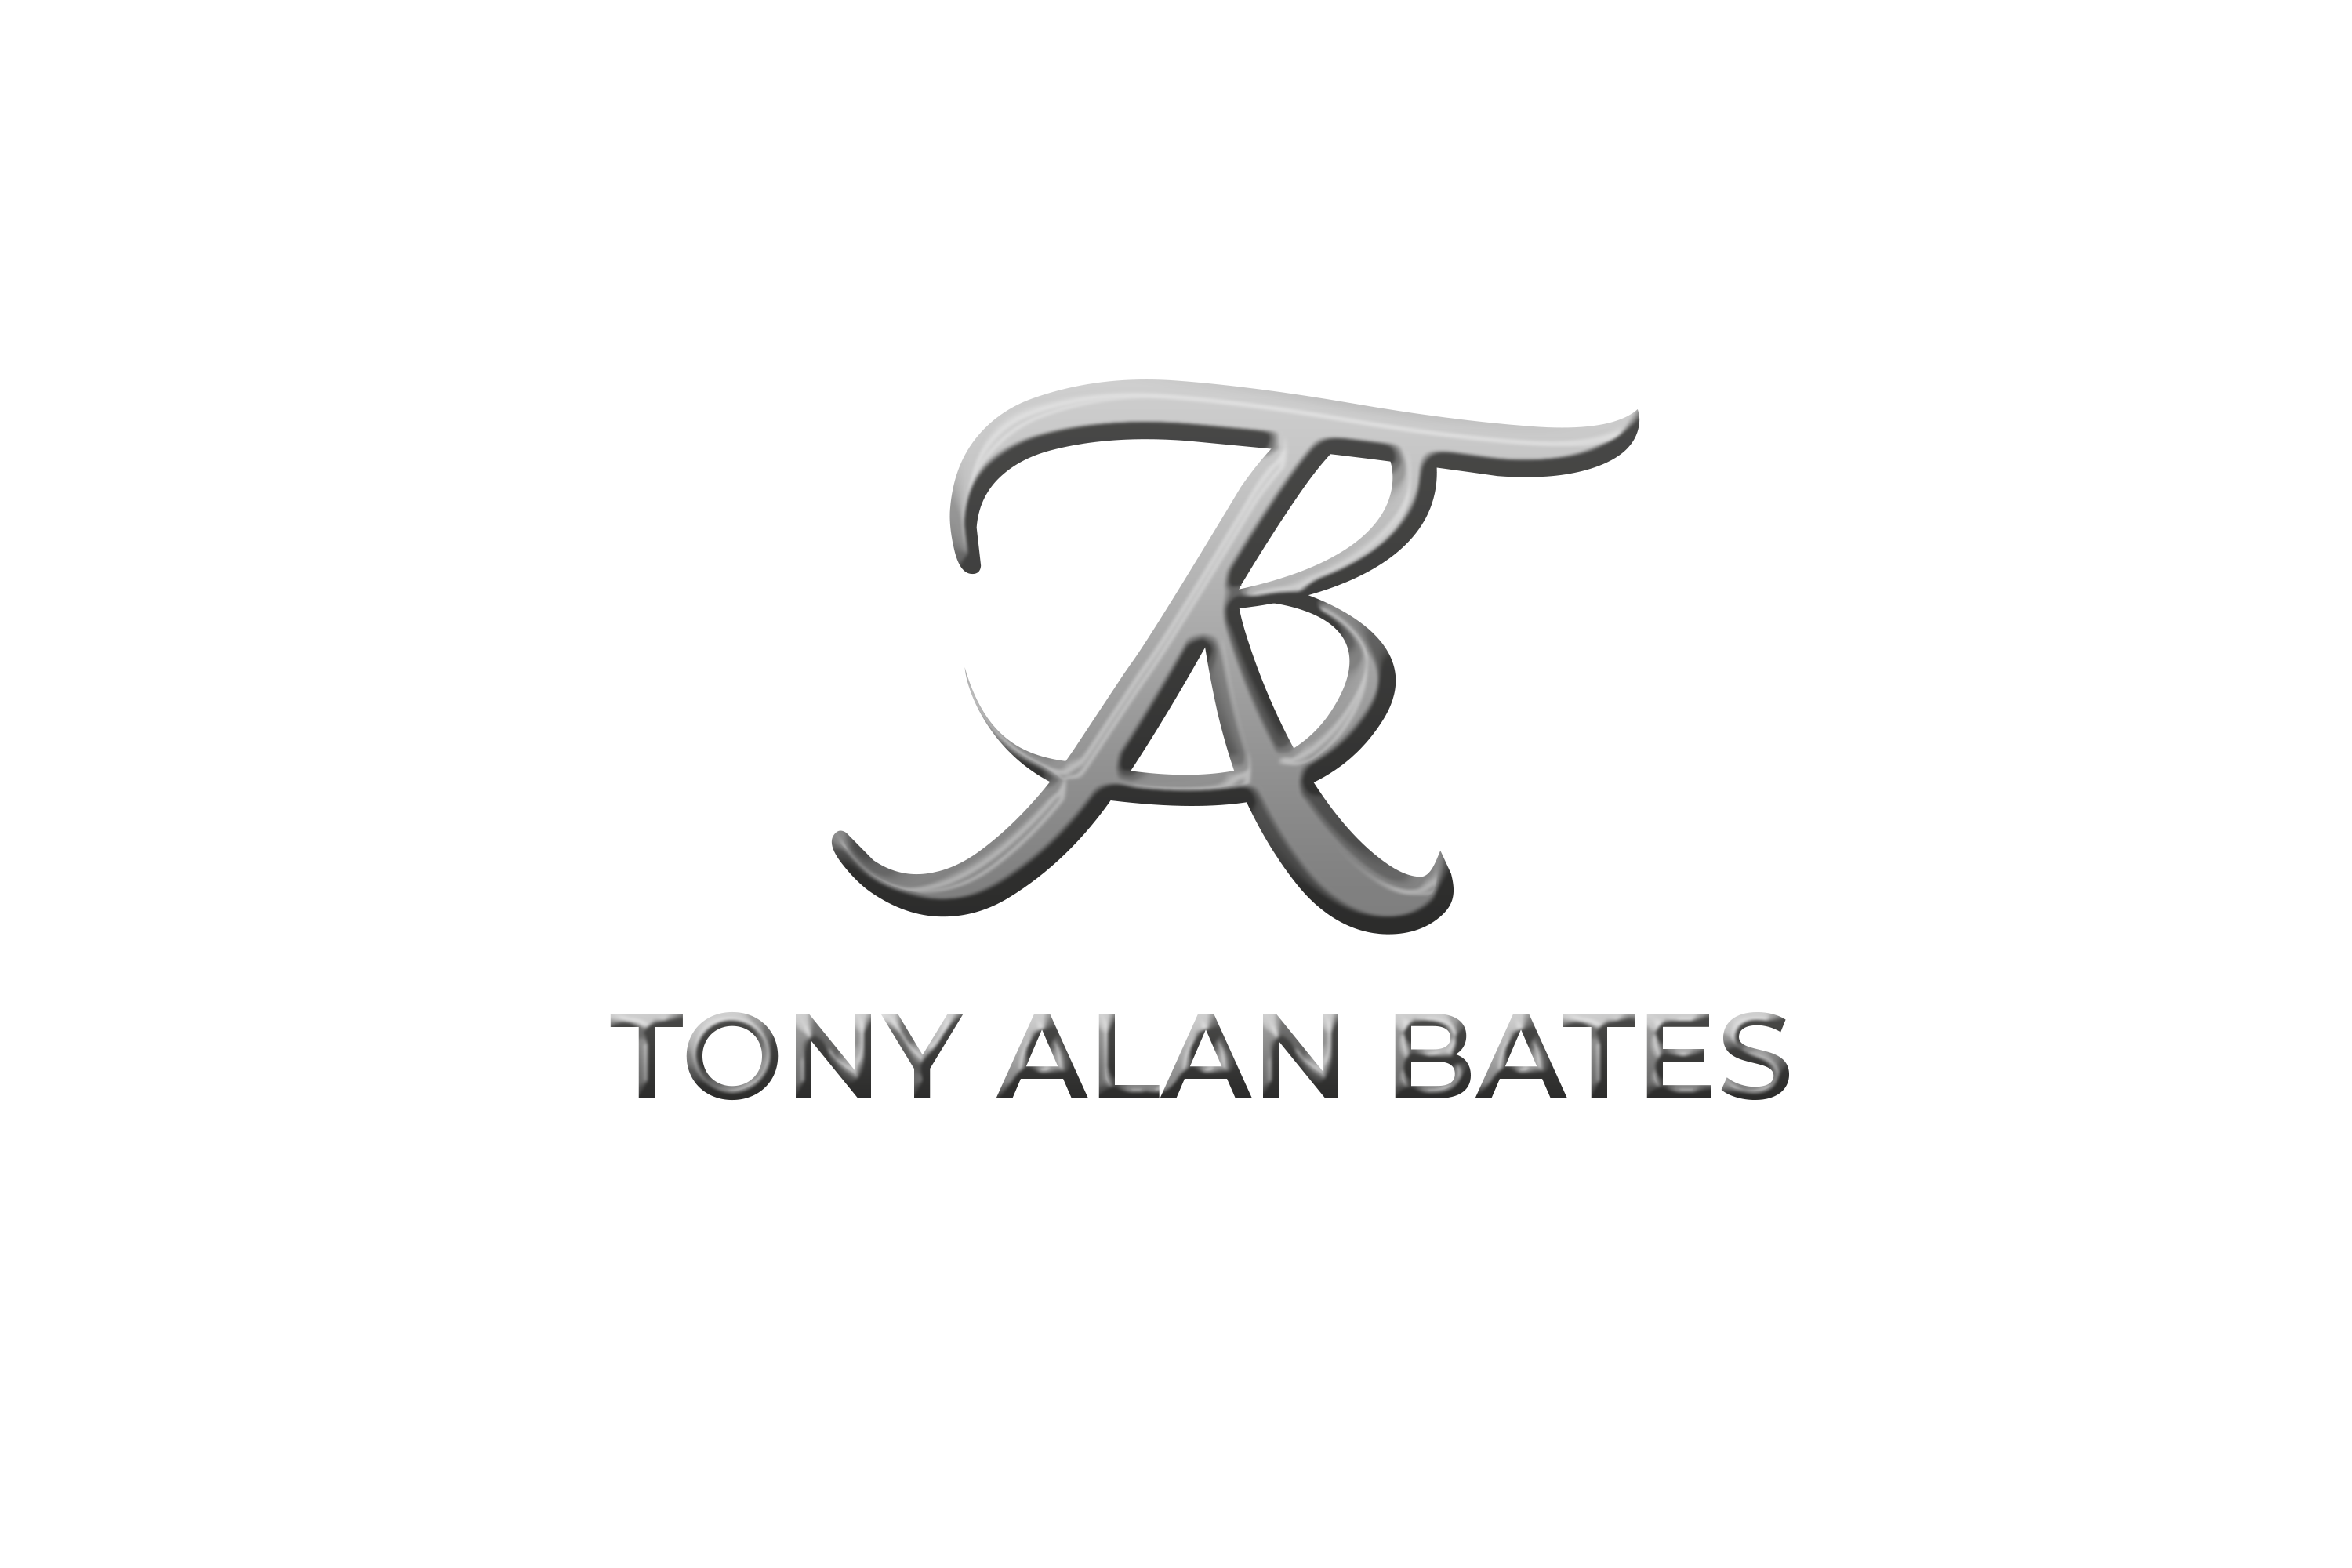 Tony Alan Bates